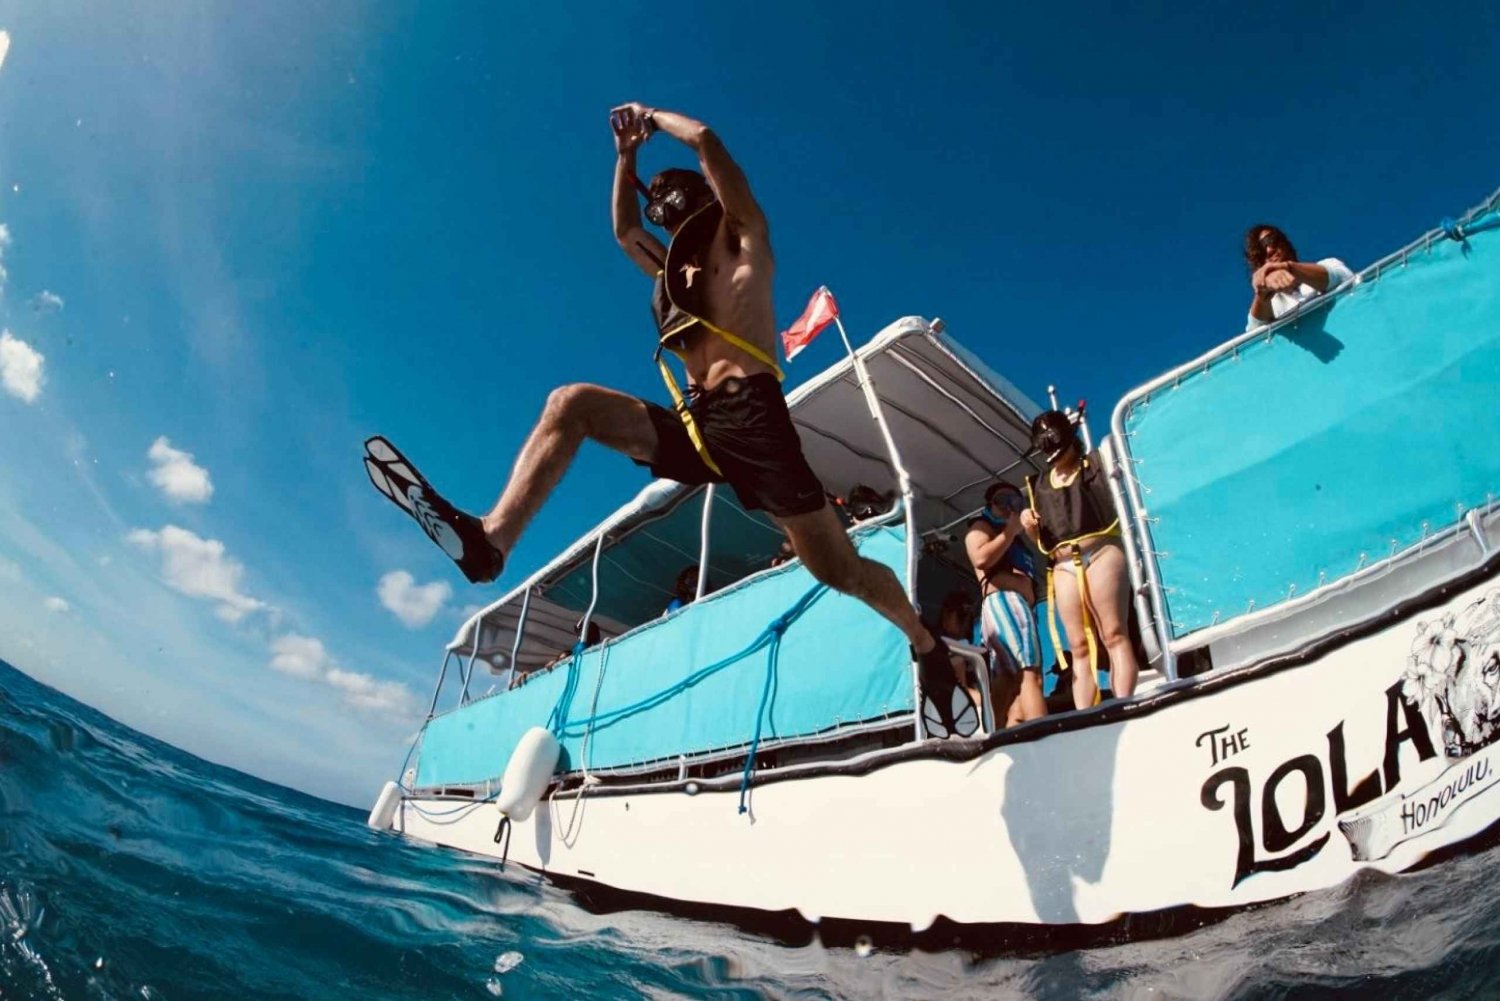 Waikiki: Snorkeltur med Hawaiis gröna havssköldpaddor